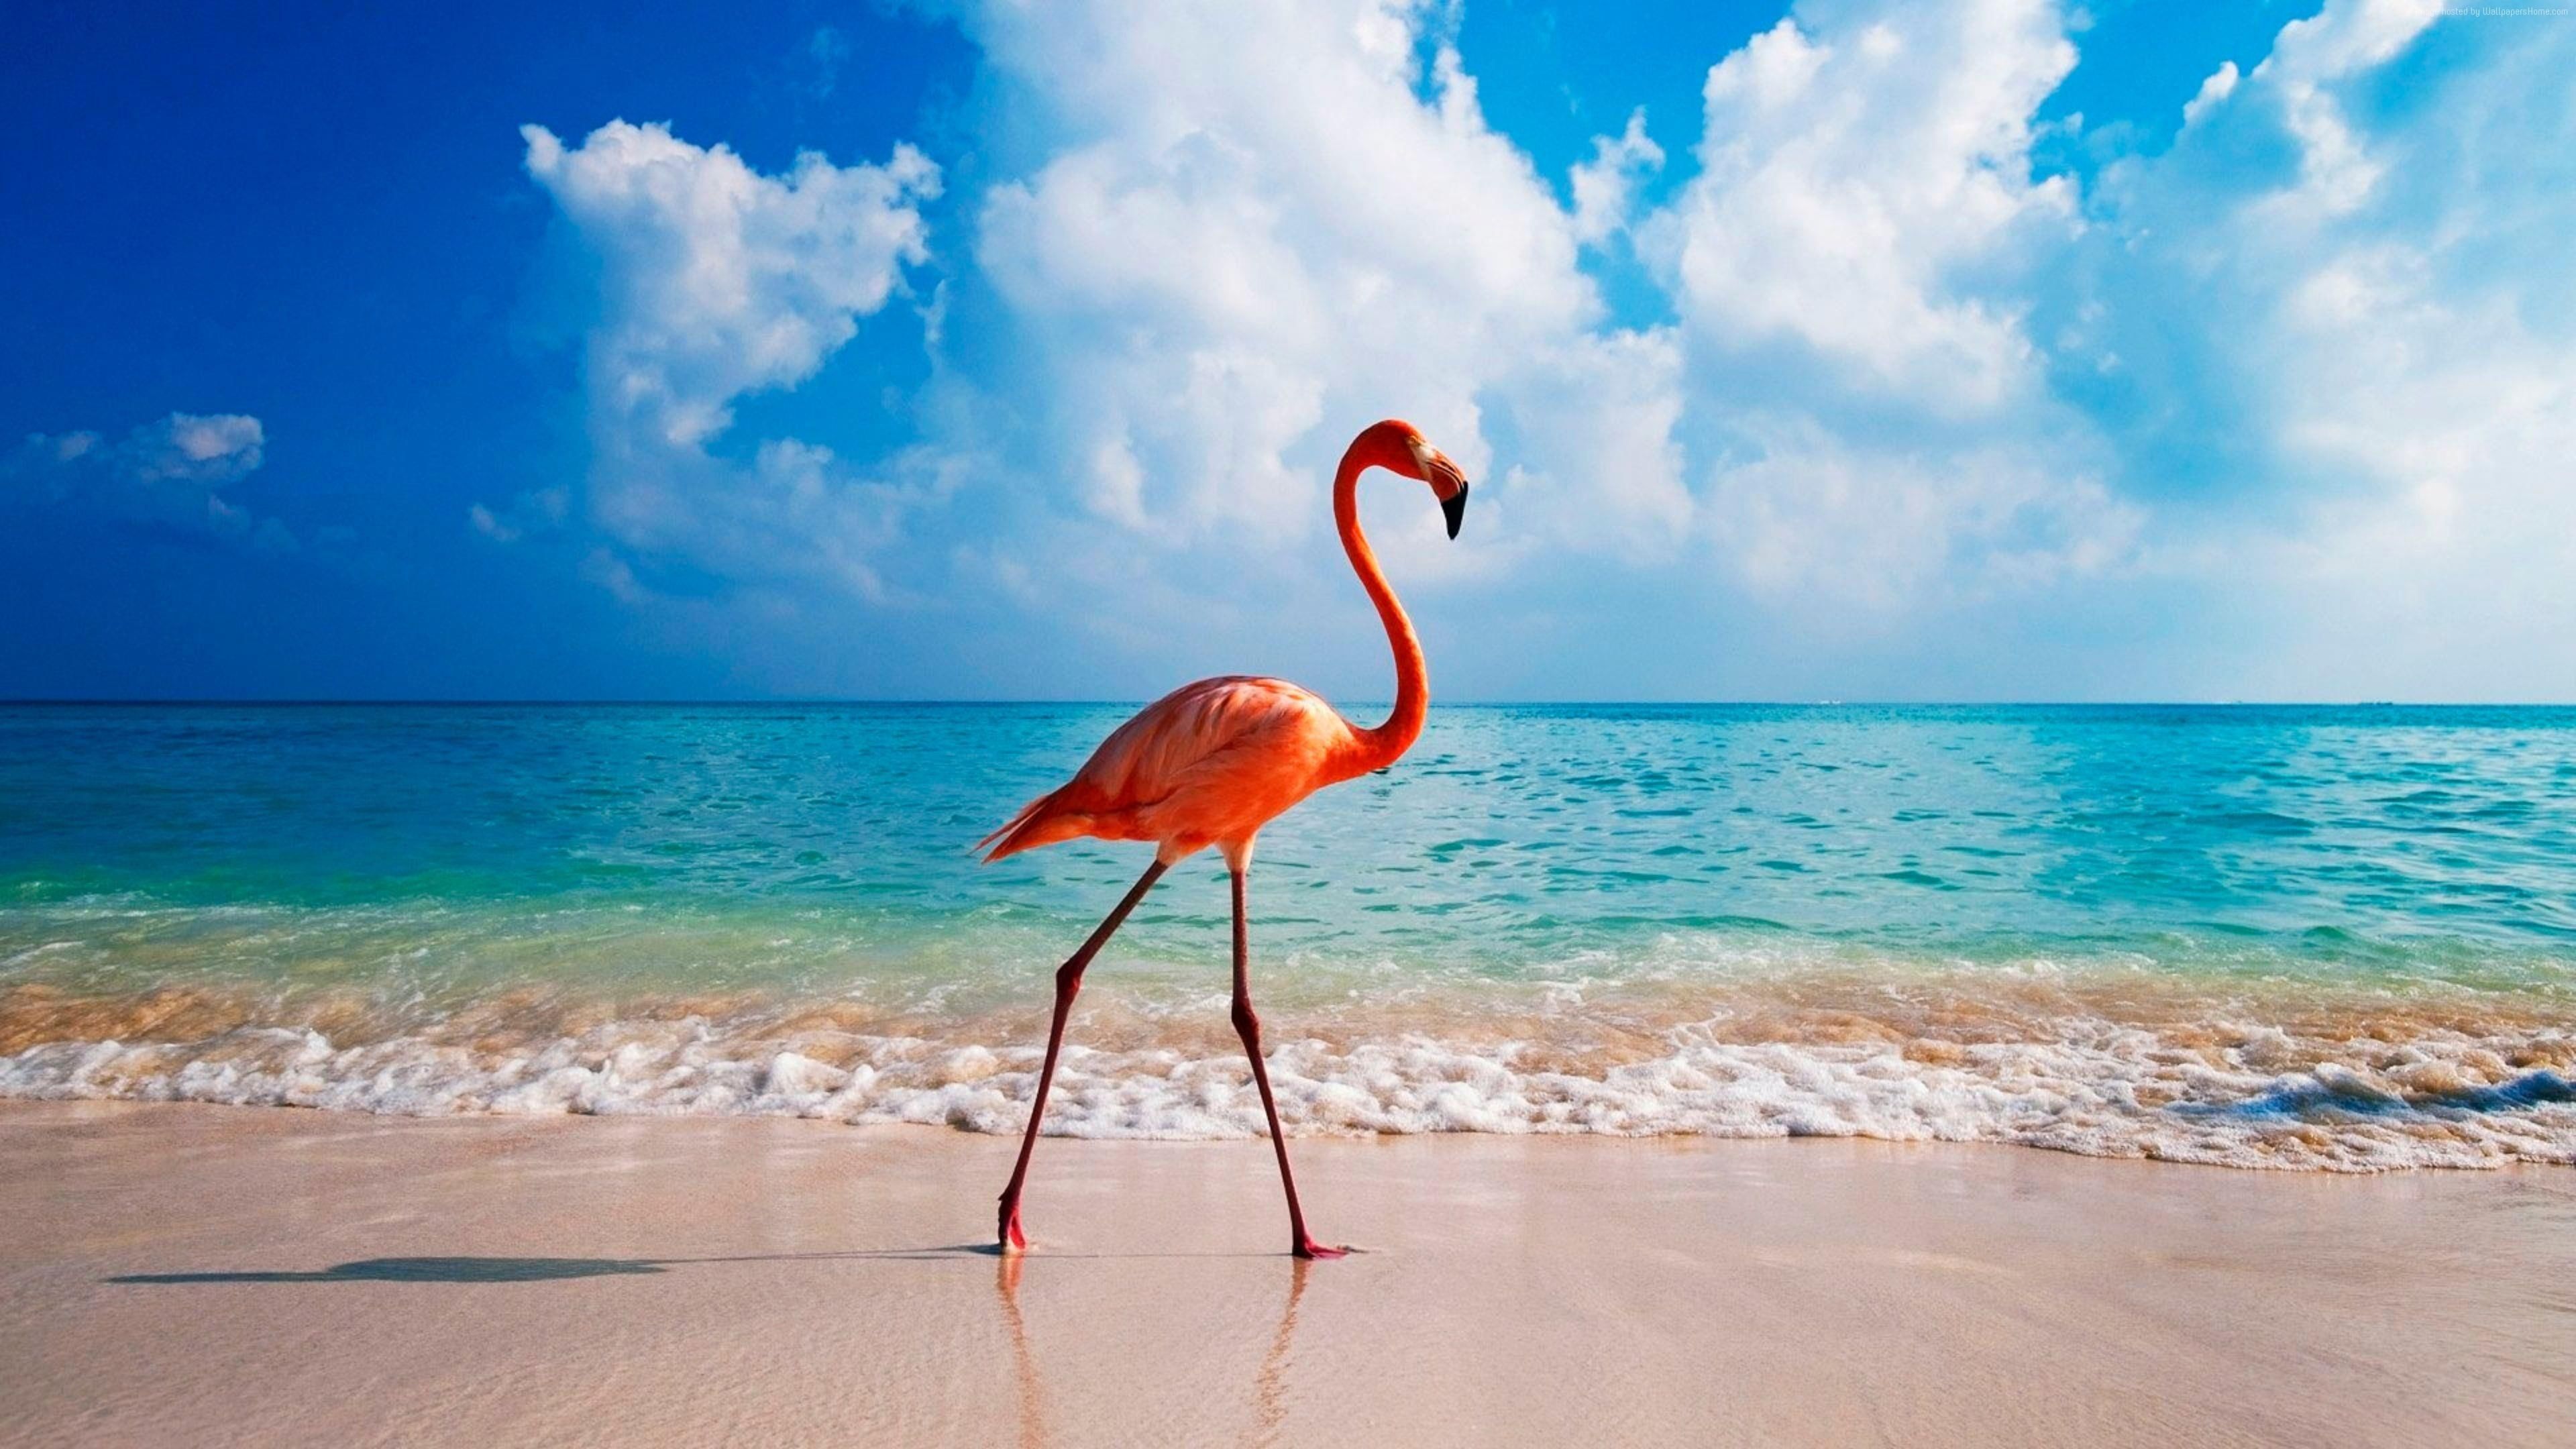 beak dutch caribbean abc islands caribbean sea #aruba #summer #summertime #cloud #beach #caribbean #sky. Fond ecran animaux, Fond d'écran flamant, Flamant rose